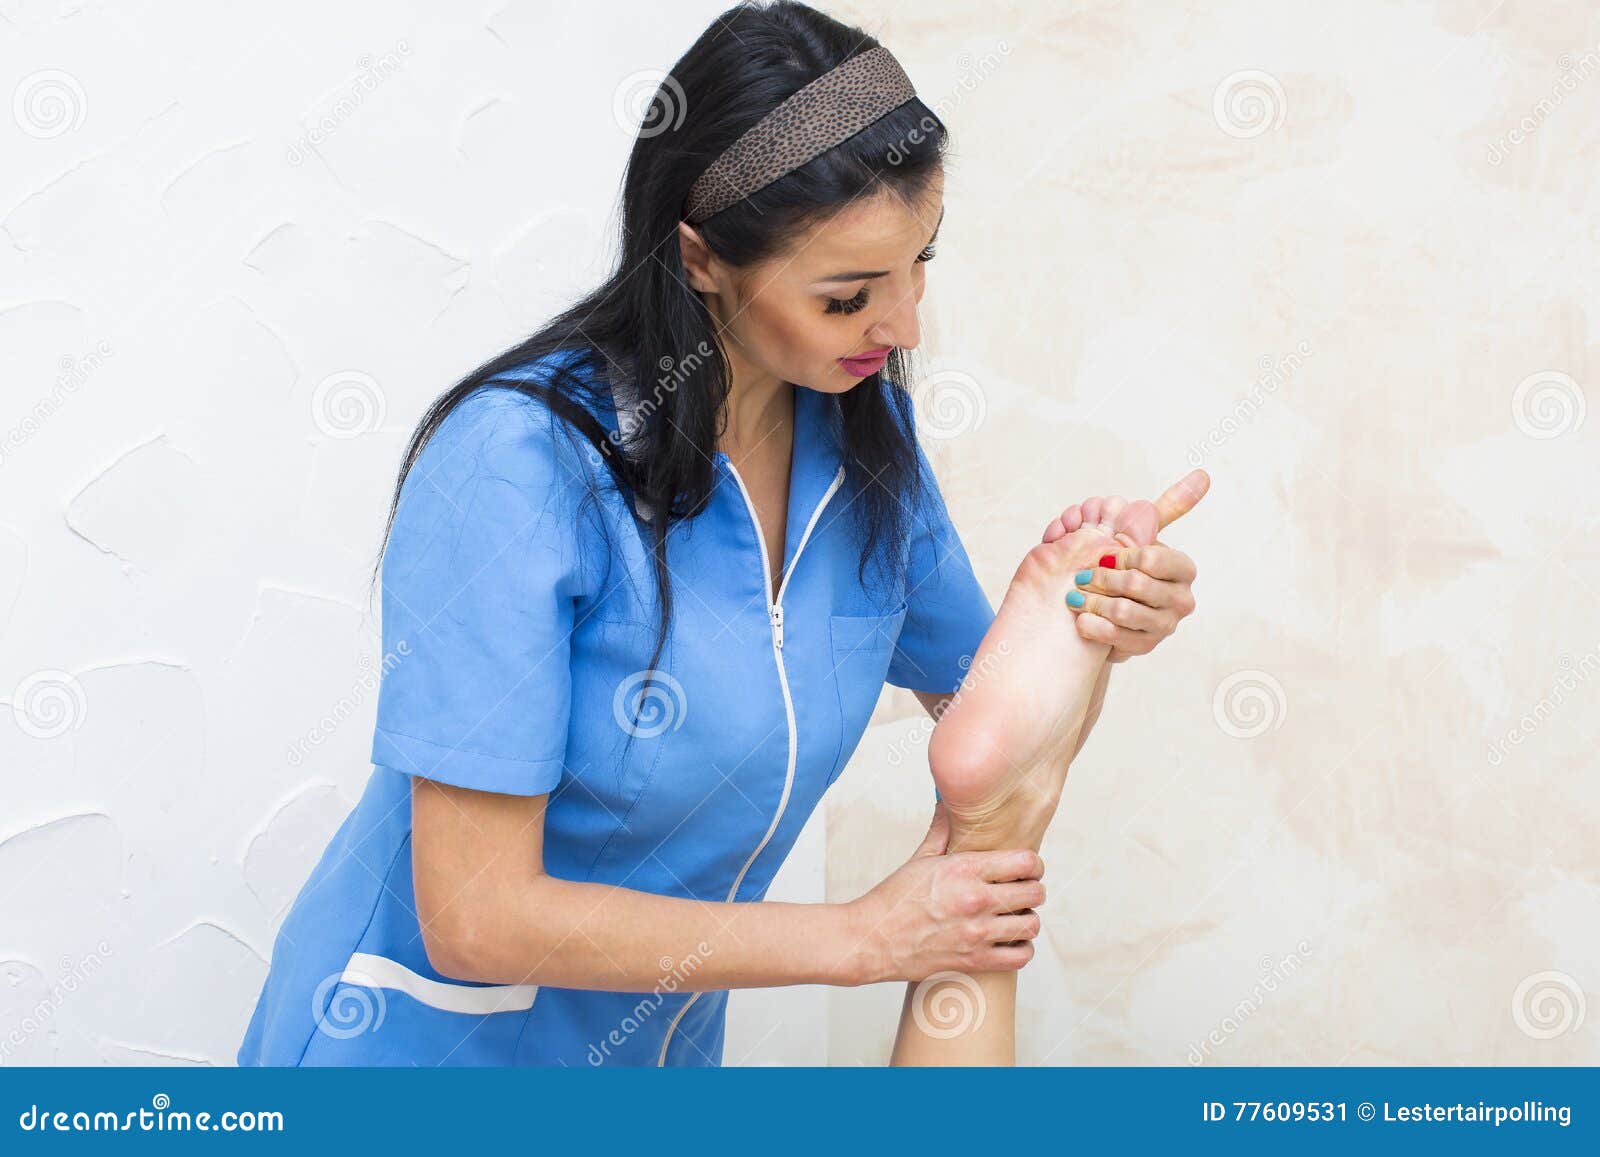 processes foot massage